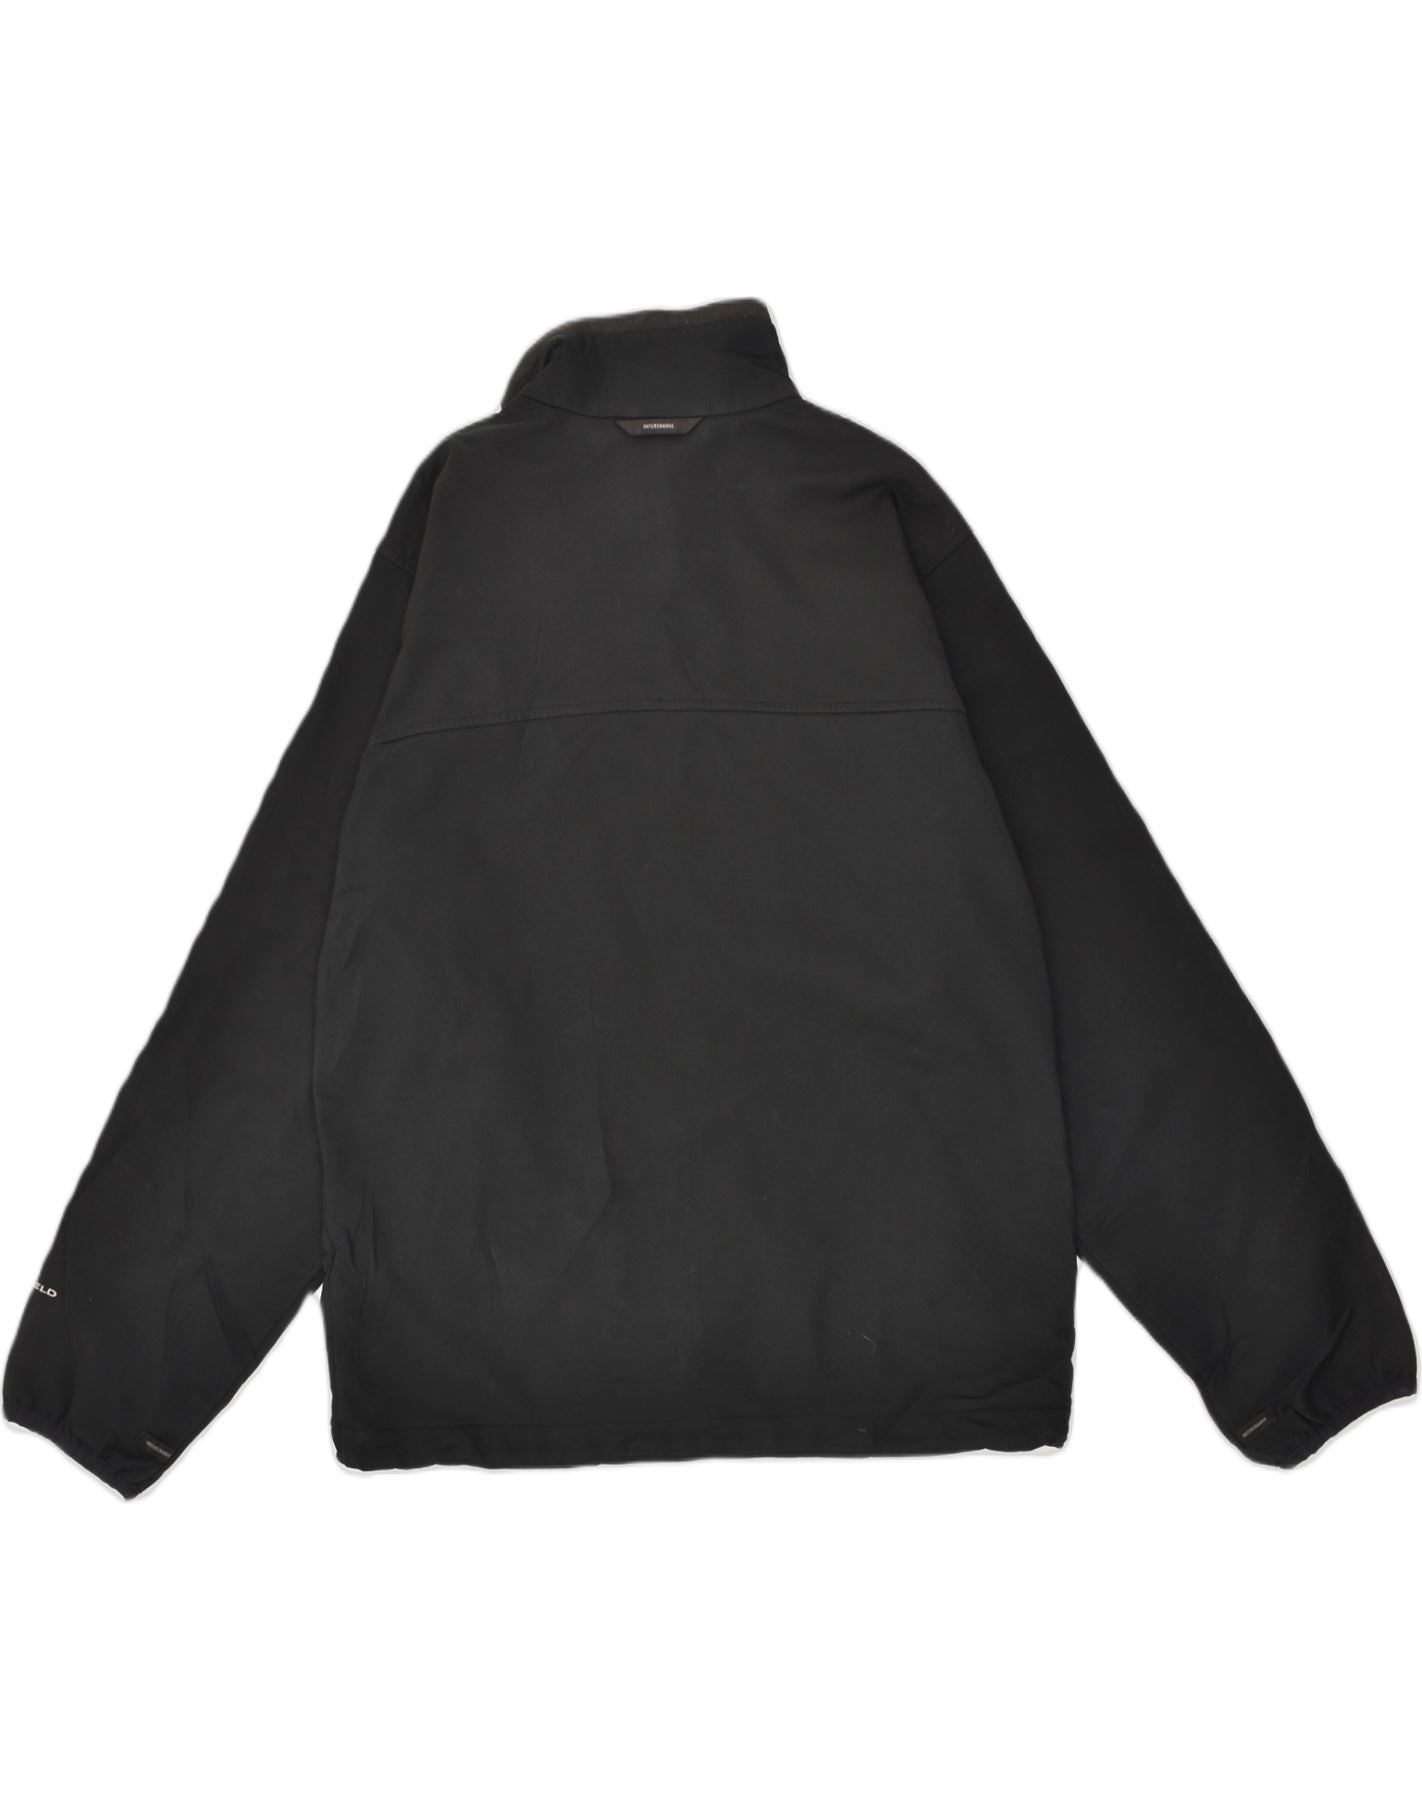 COLUMBIA Mens Omni-Shield Windbreaker Jacket UK 36 Small Black Polyester, Vintage & Second-Hand Clothing Online